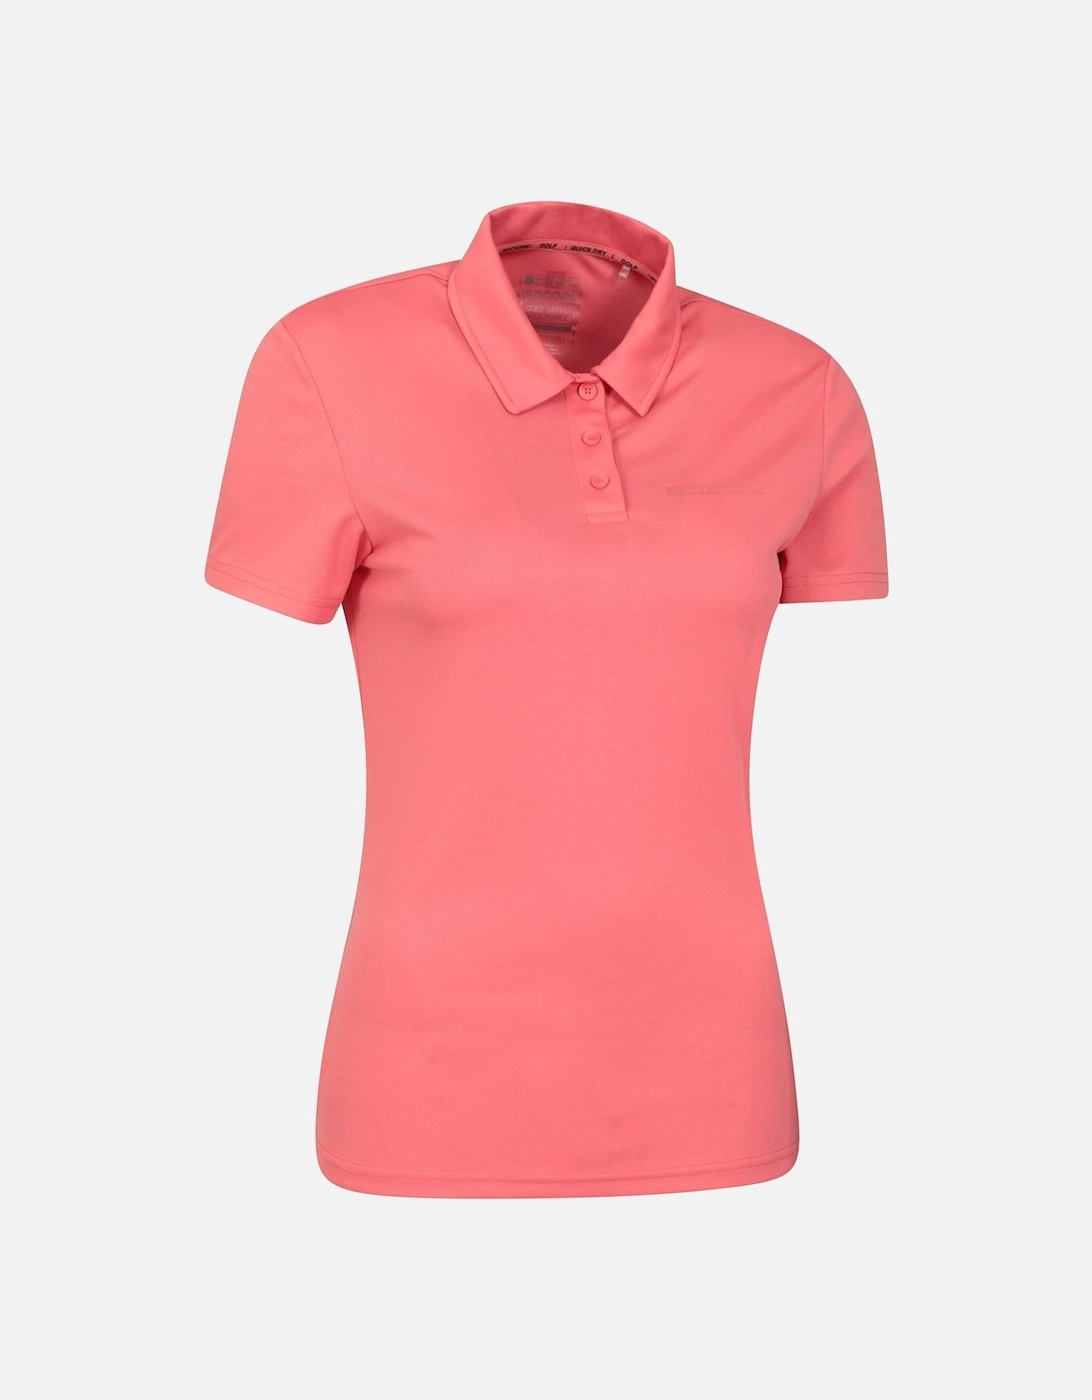 Womens/Ladies Classic IsoCool Golf Polo Shirt